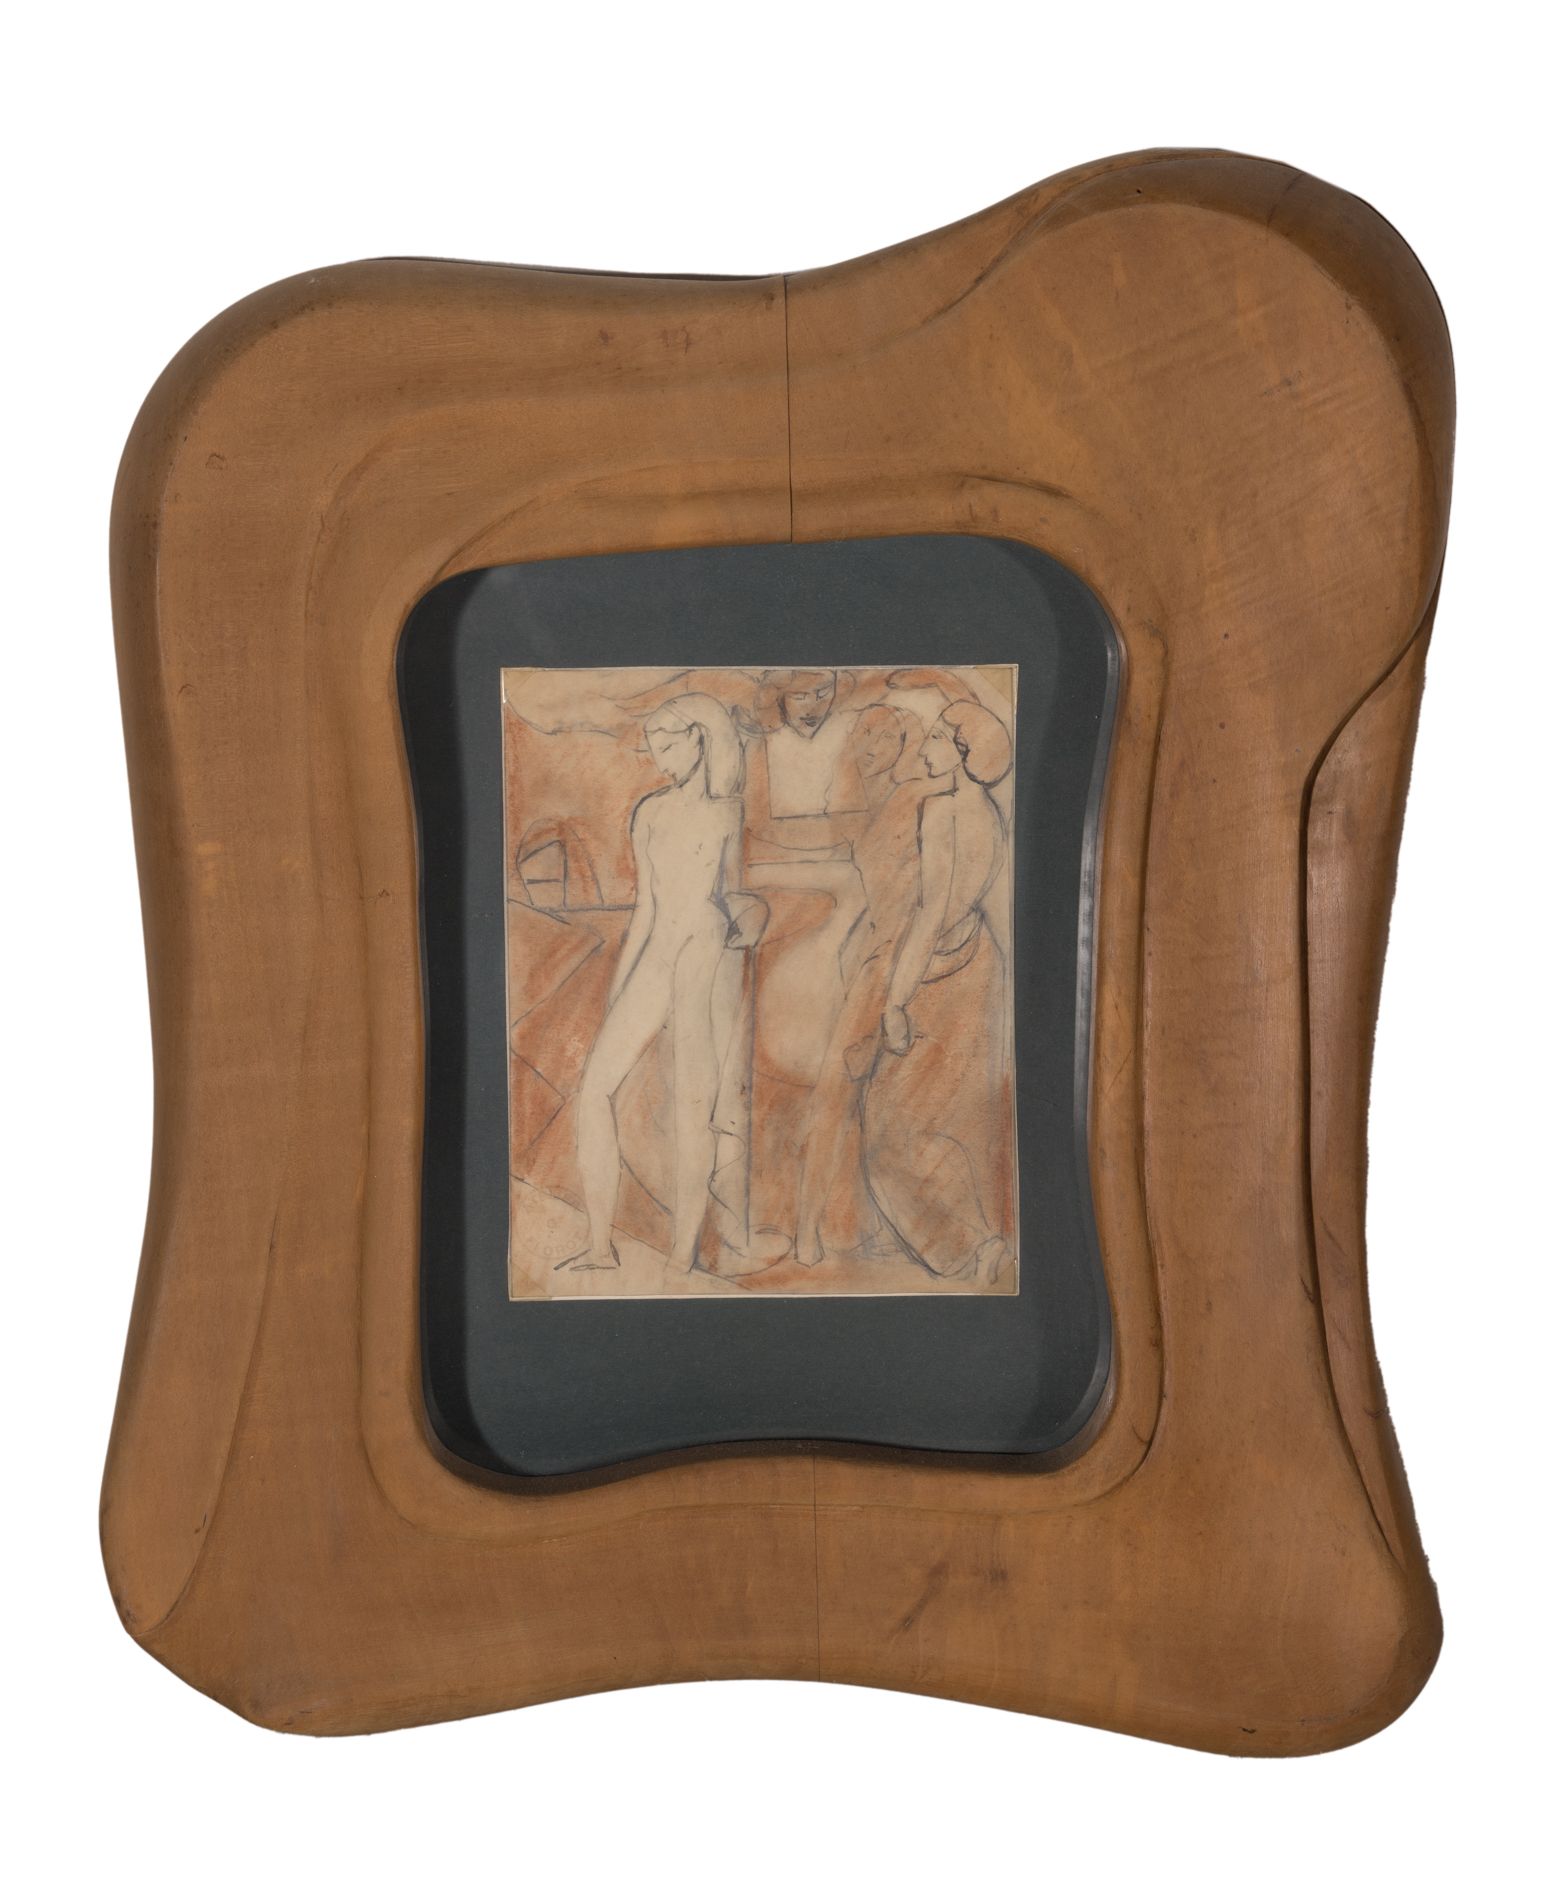 Null 古斯塔夫-福洛特 (1885-1965)
女性裸体 
纸上水墨画，左下方有工作室印章。 
尺寸：16 x 13厘米